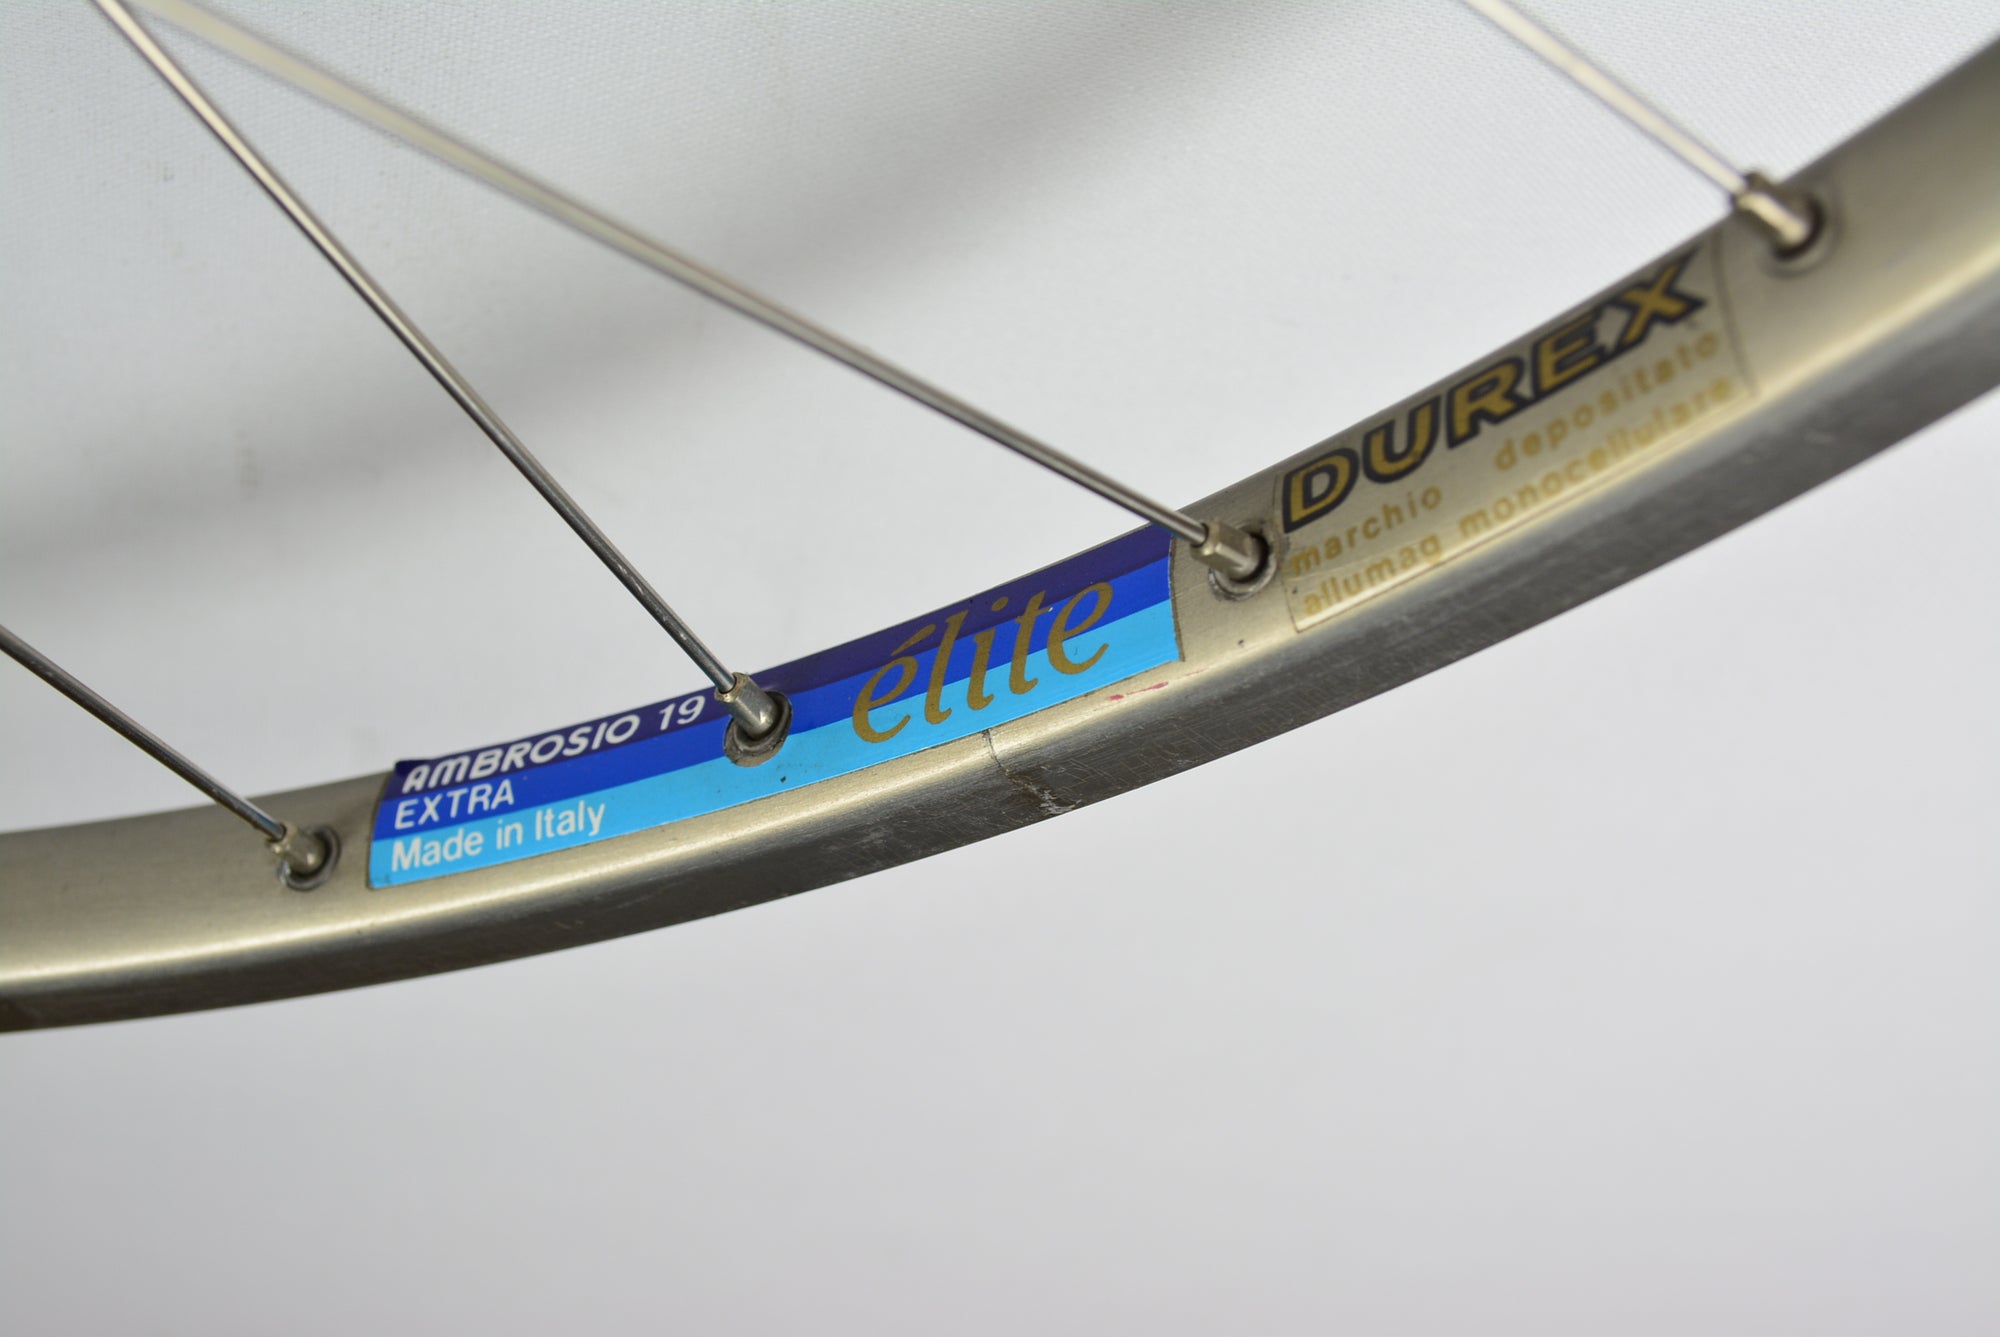 FT Extra Rolling Laufradsatz mit Ambrosio 19 Elite Durex Felge